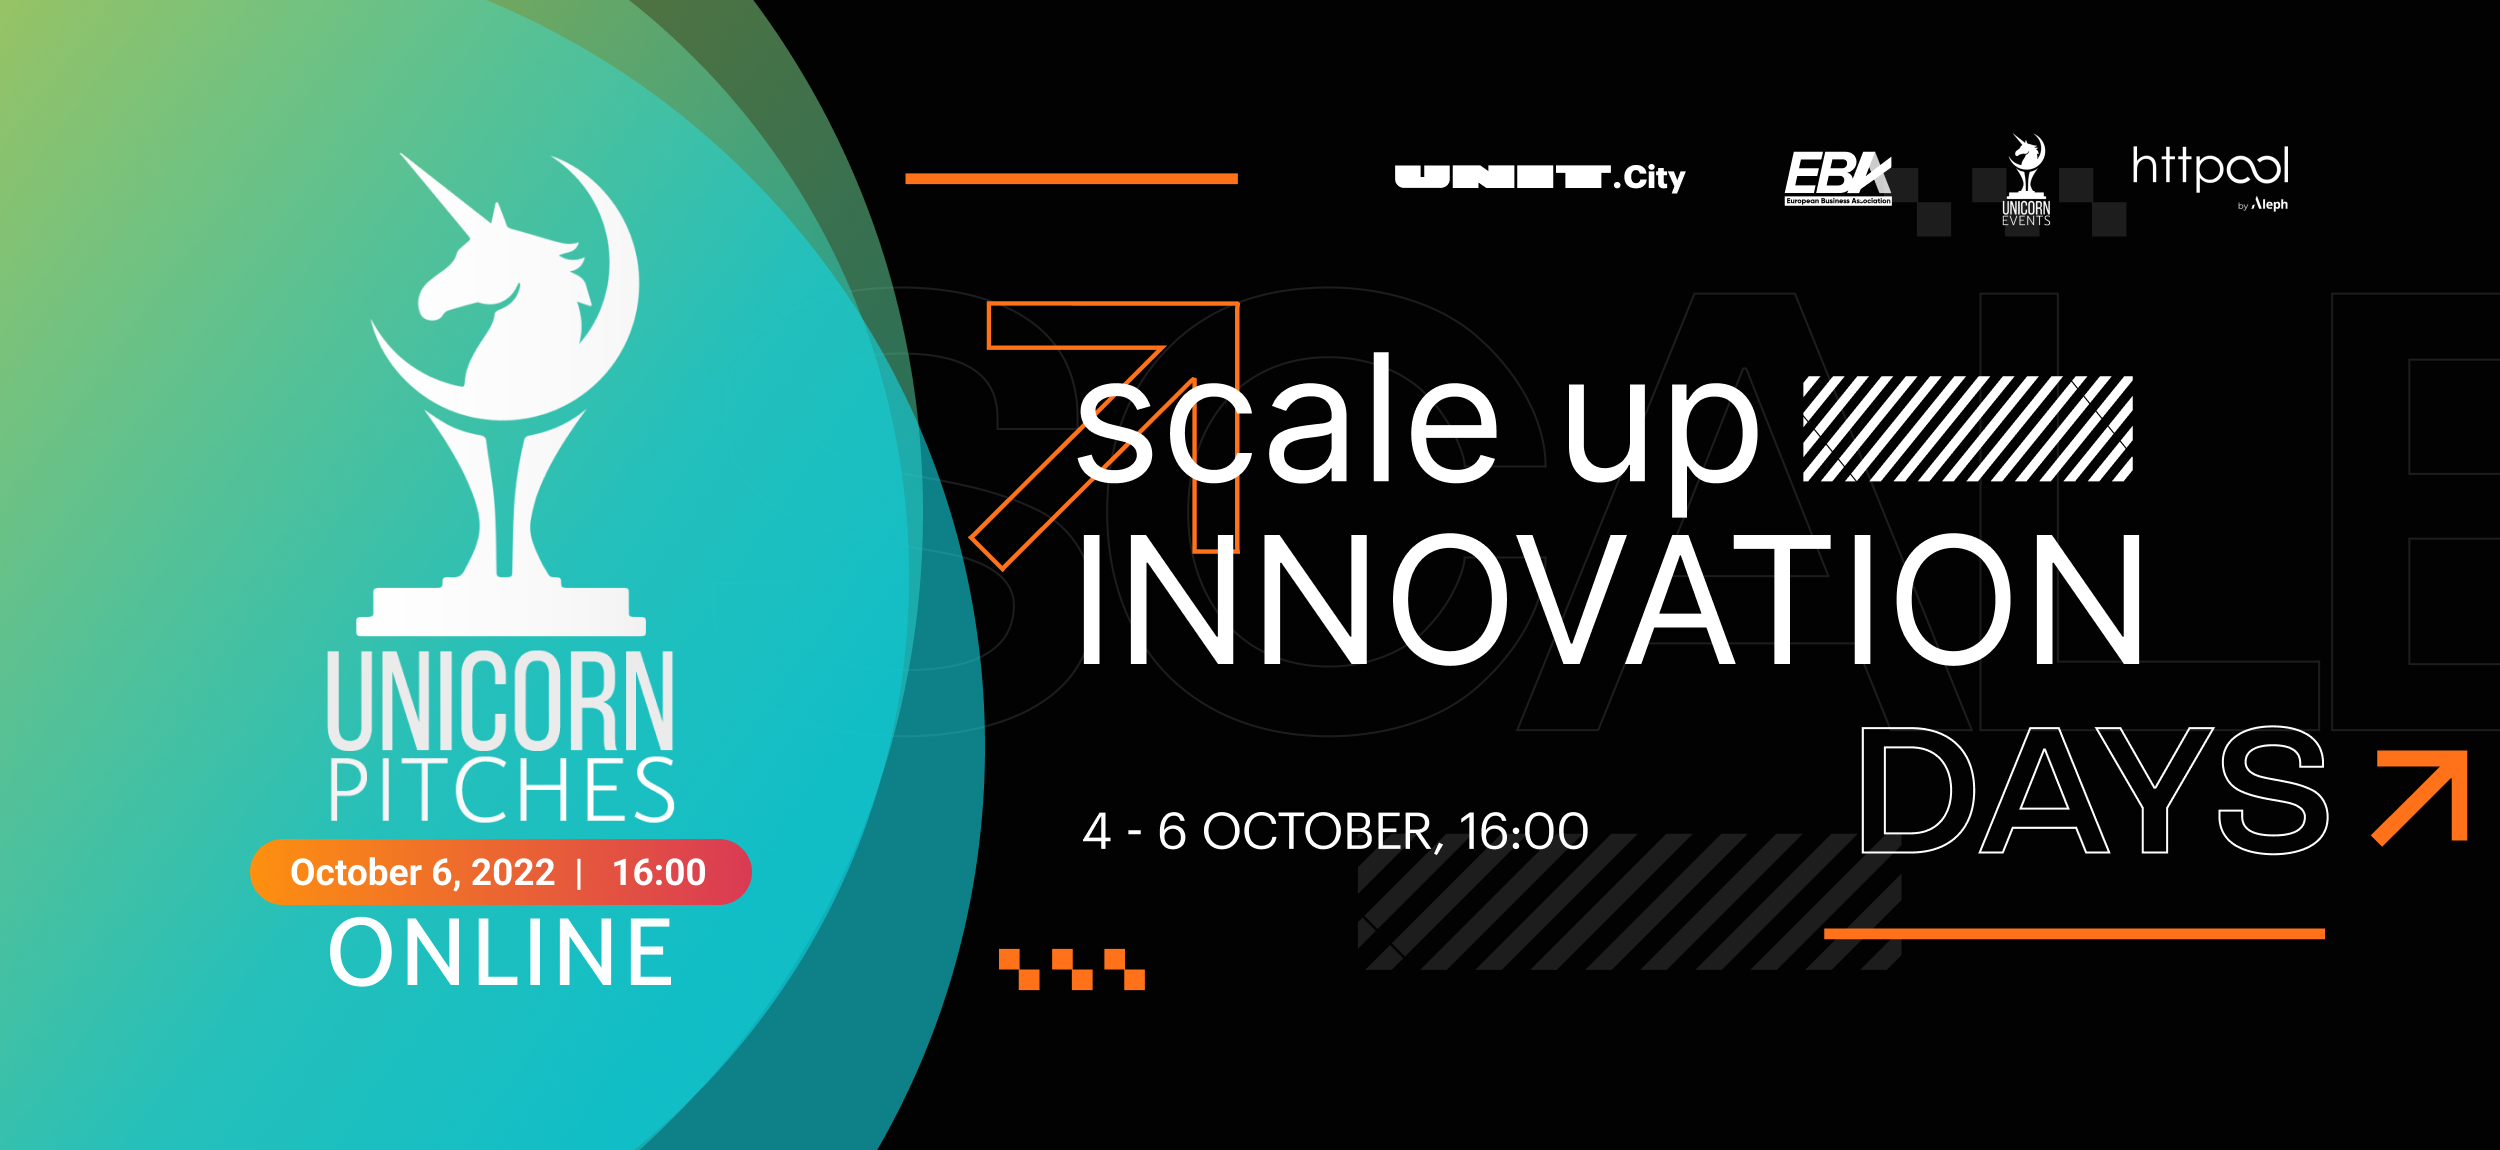 Scale Up Innovation Days